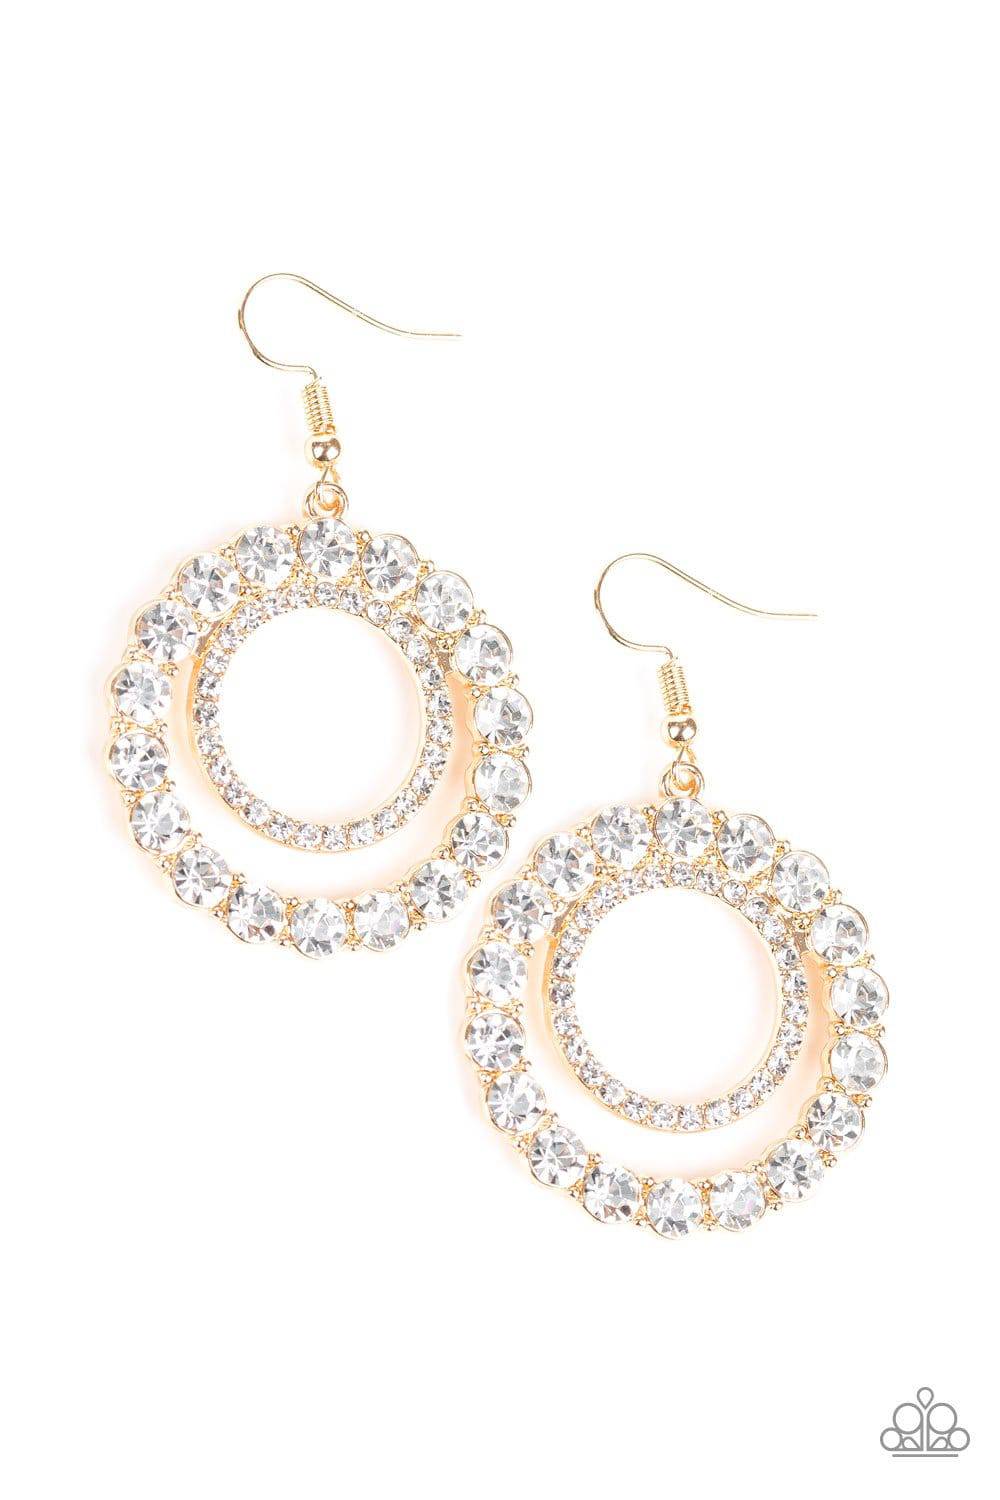 Spotlight Shout Out - Gold Rhinestone Earrings - Paparazzi Accessories - GlaMarous Titi Jewels